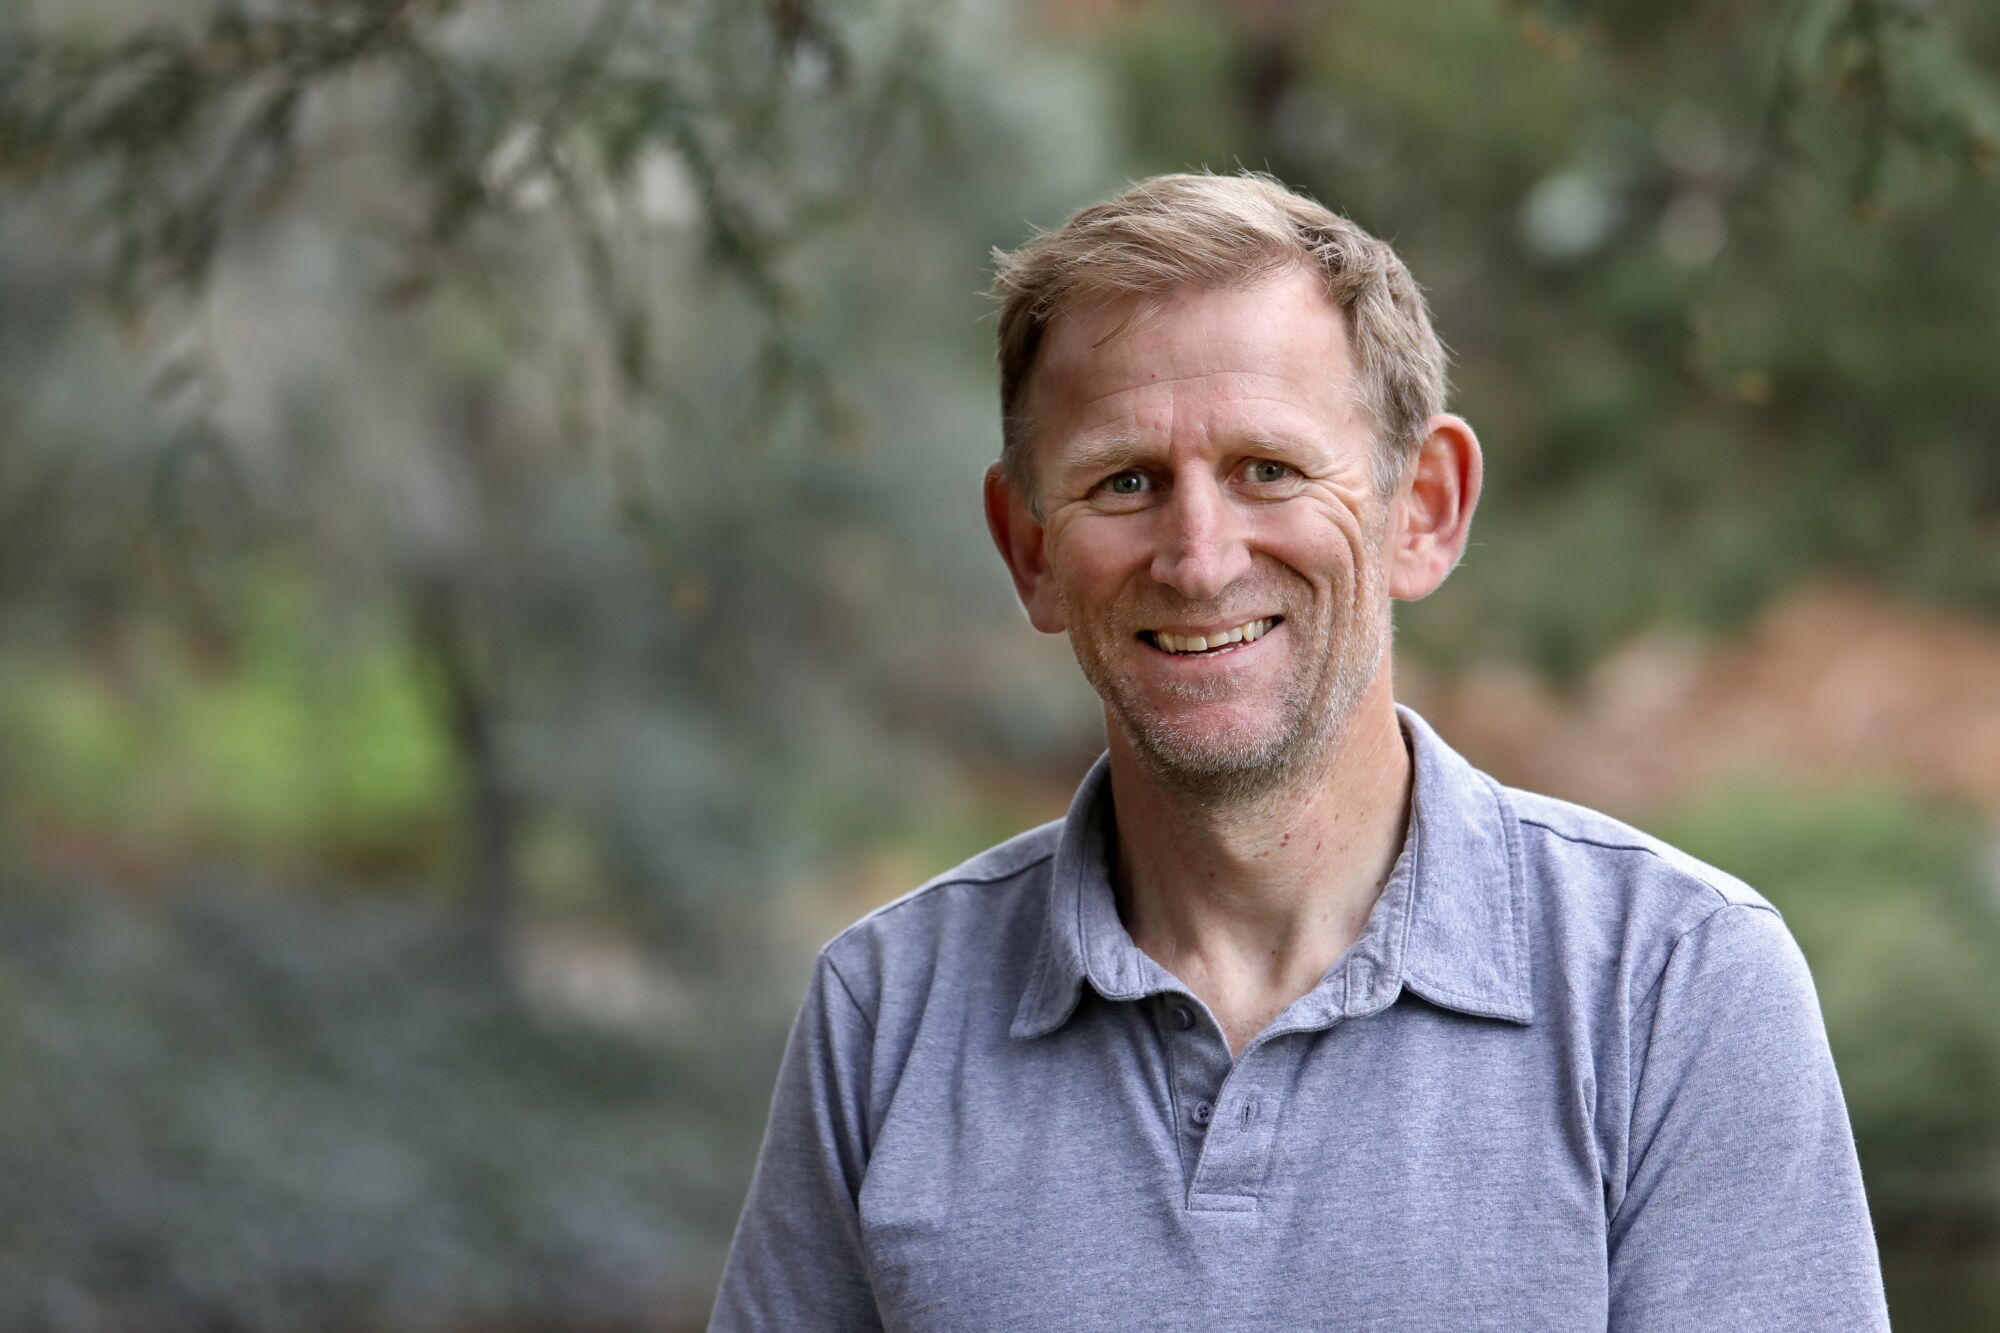 UC Davis professor Aaron Smith smiles as he stands near greenery.